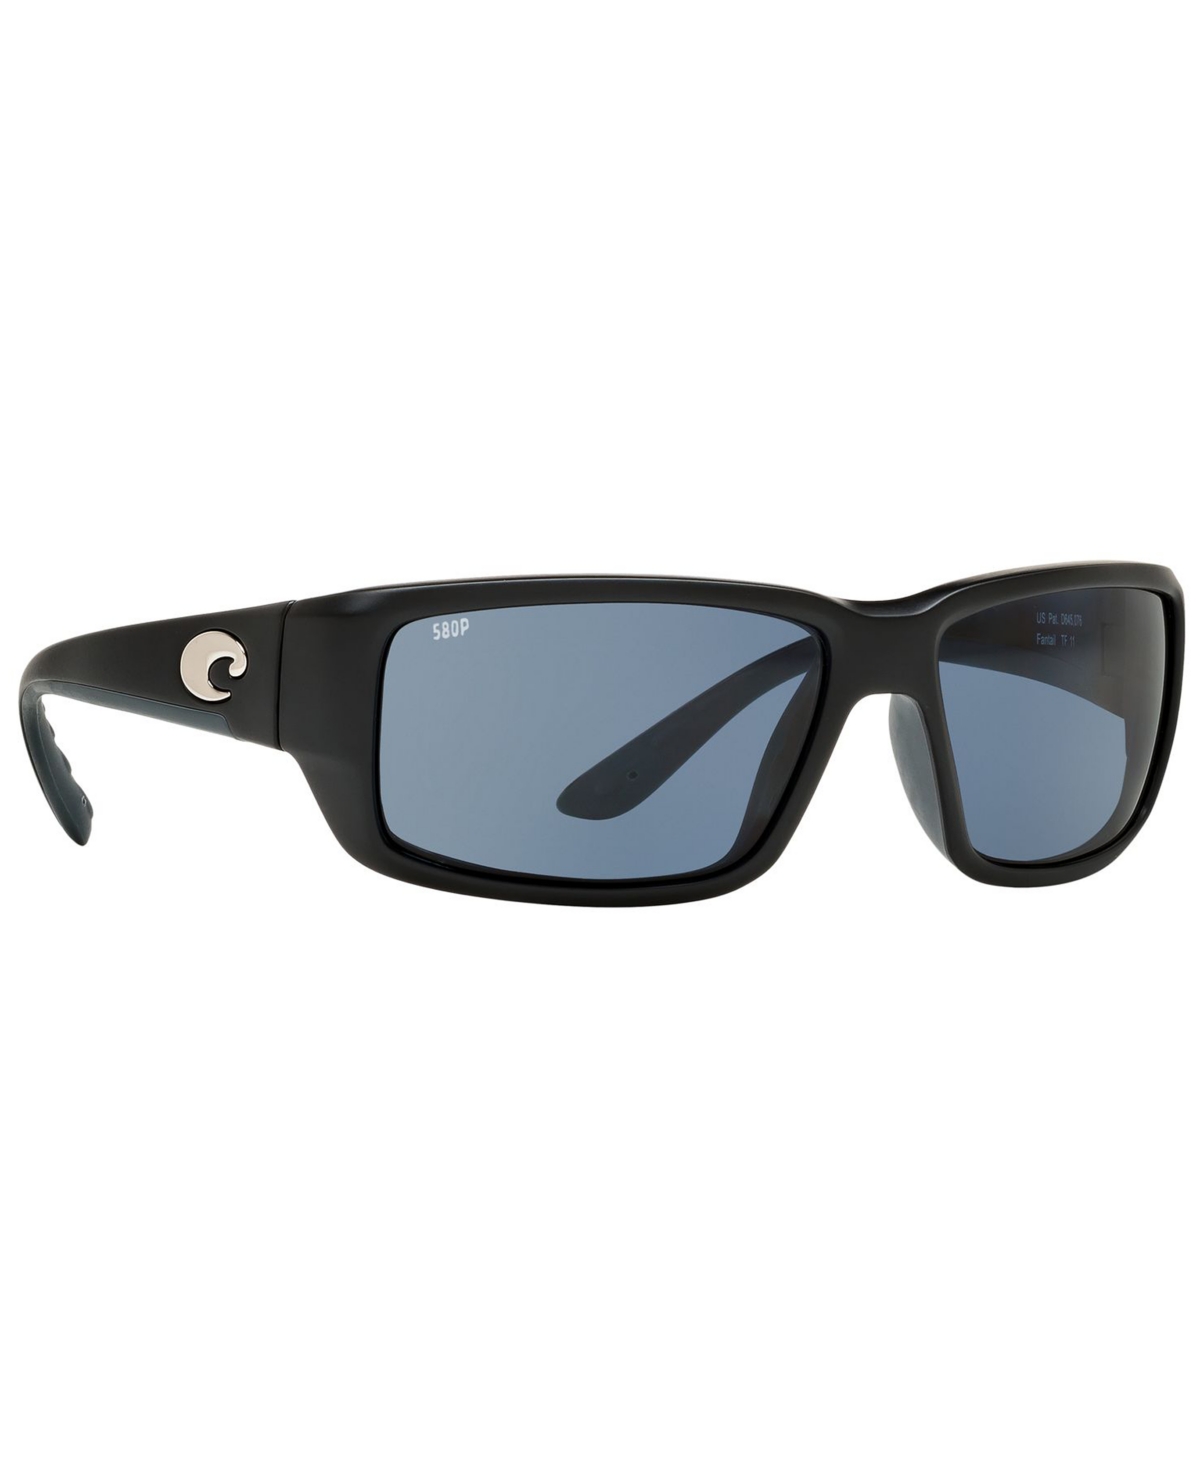 Shop Costa Del Mar Polarized Sunglasses, Fantail Polarized 59p In Black,grey Polar